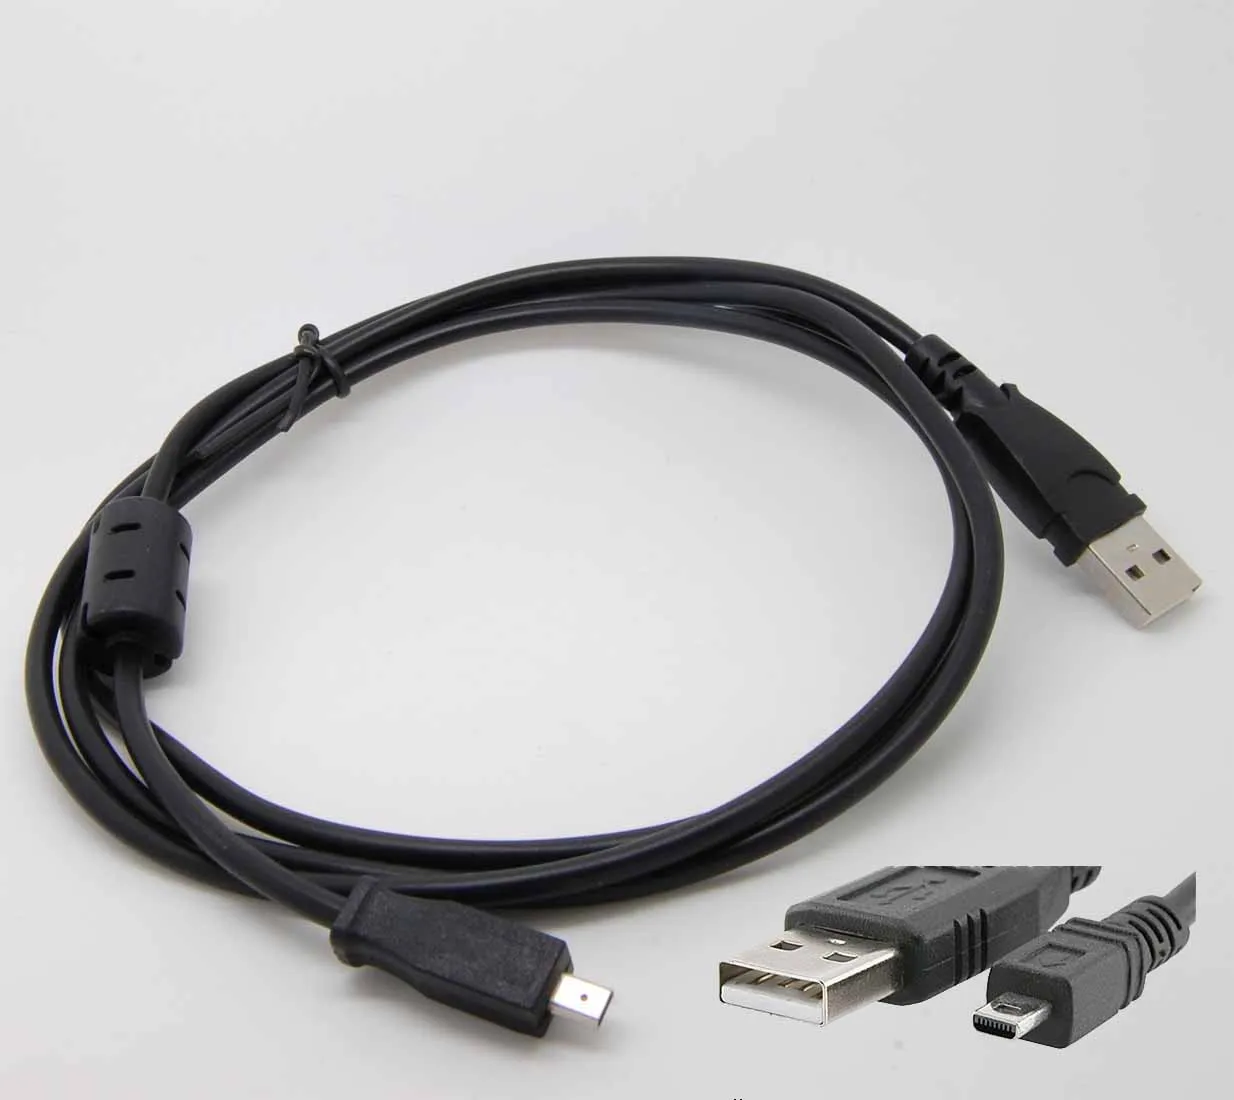 USB кабель для передачи данных KODAK C763 C813 C875 C913 CD33 CD40 CD43 CD913 EasyShare M340 C533 C603 C613 C633 C643 C653